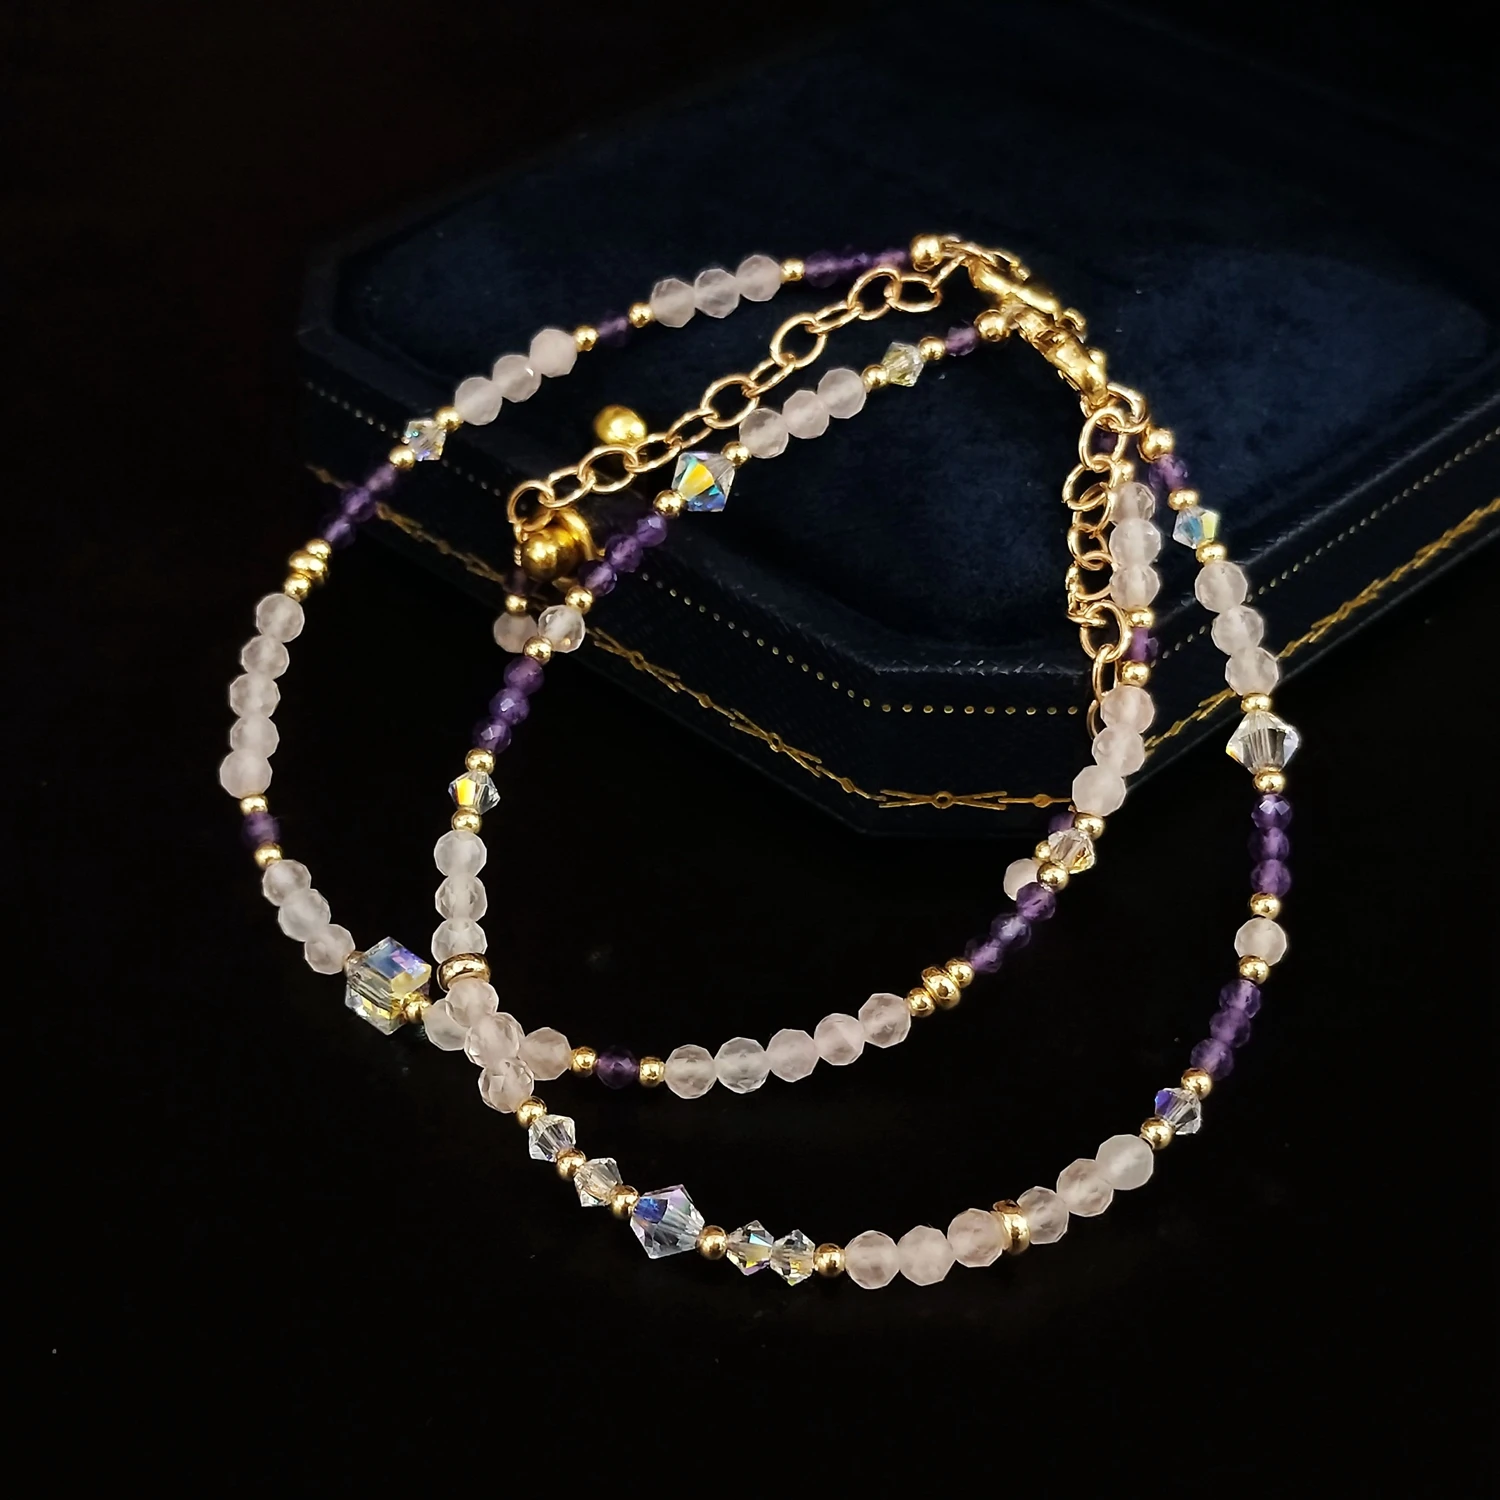 

Lii Ji Rose Quartz Amethyst Austrian Crystal 14K Gold Filled Bracelet 18+4cm Natural 2mm Stone Handndmade Jewelry For Women Gift